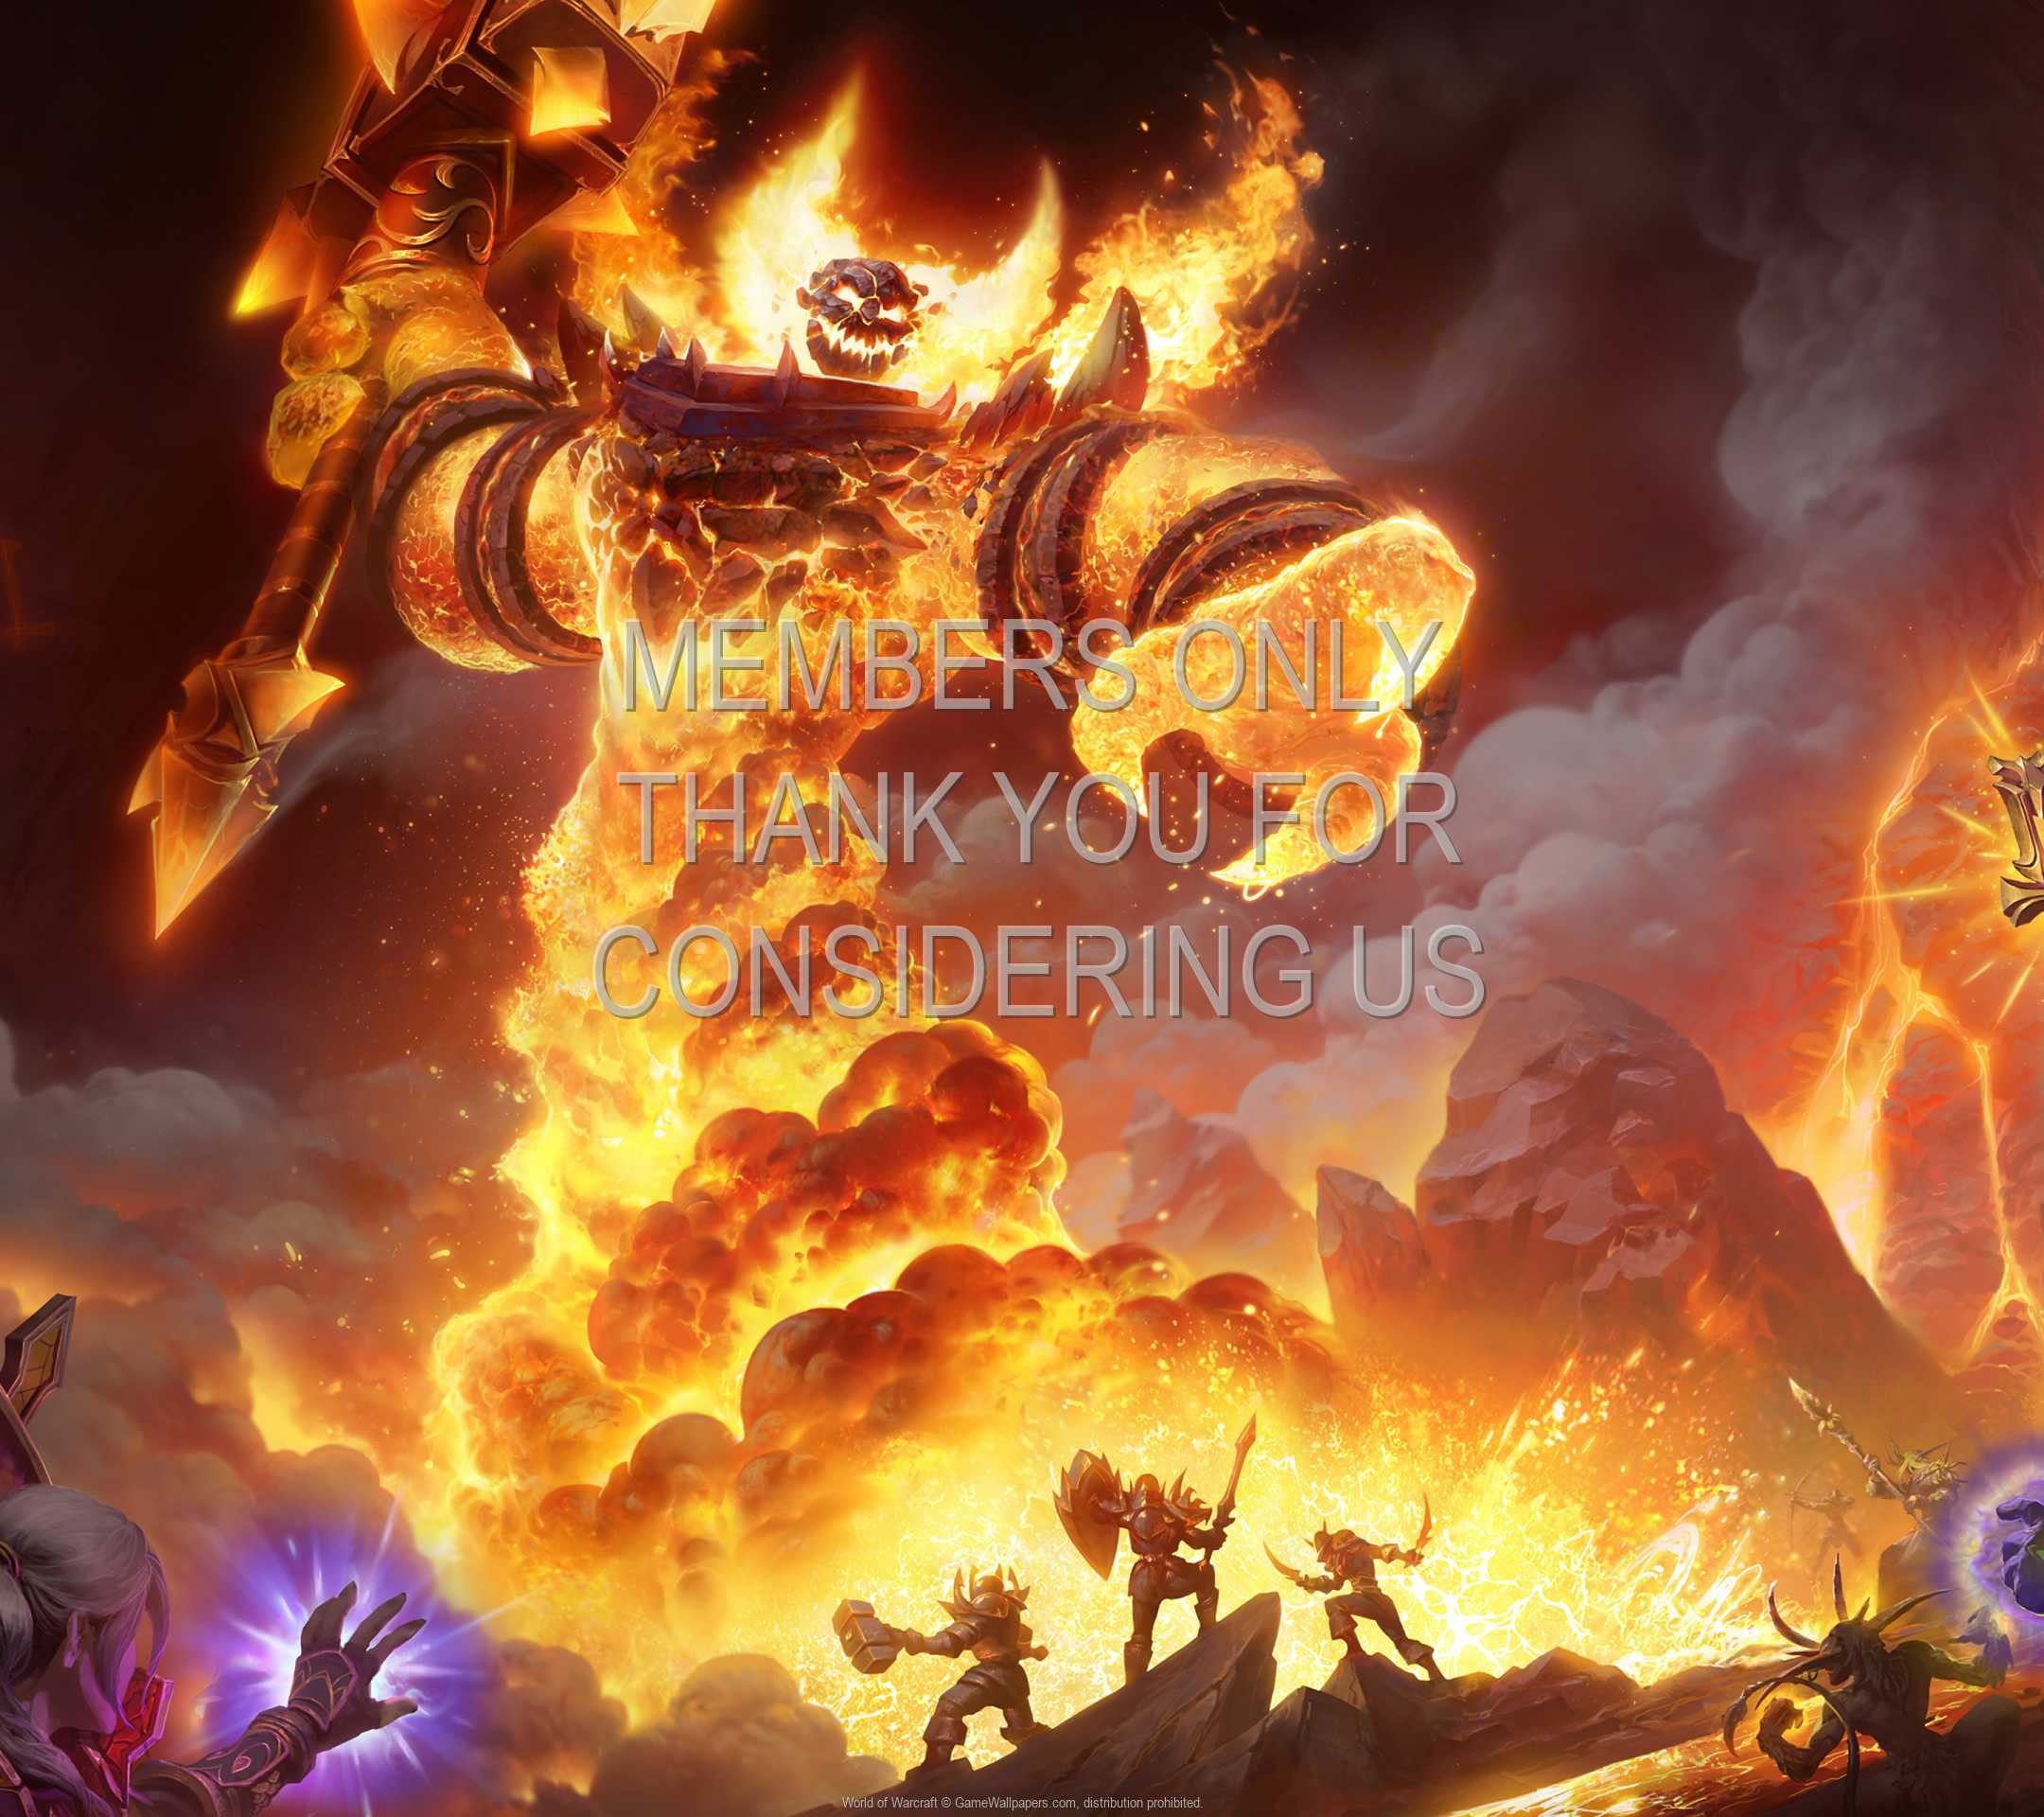 World of Warcraft 1080p%20Horizontal Mobile wallpaper or background 18